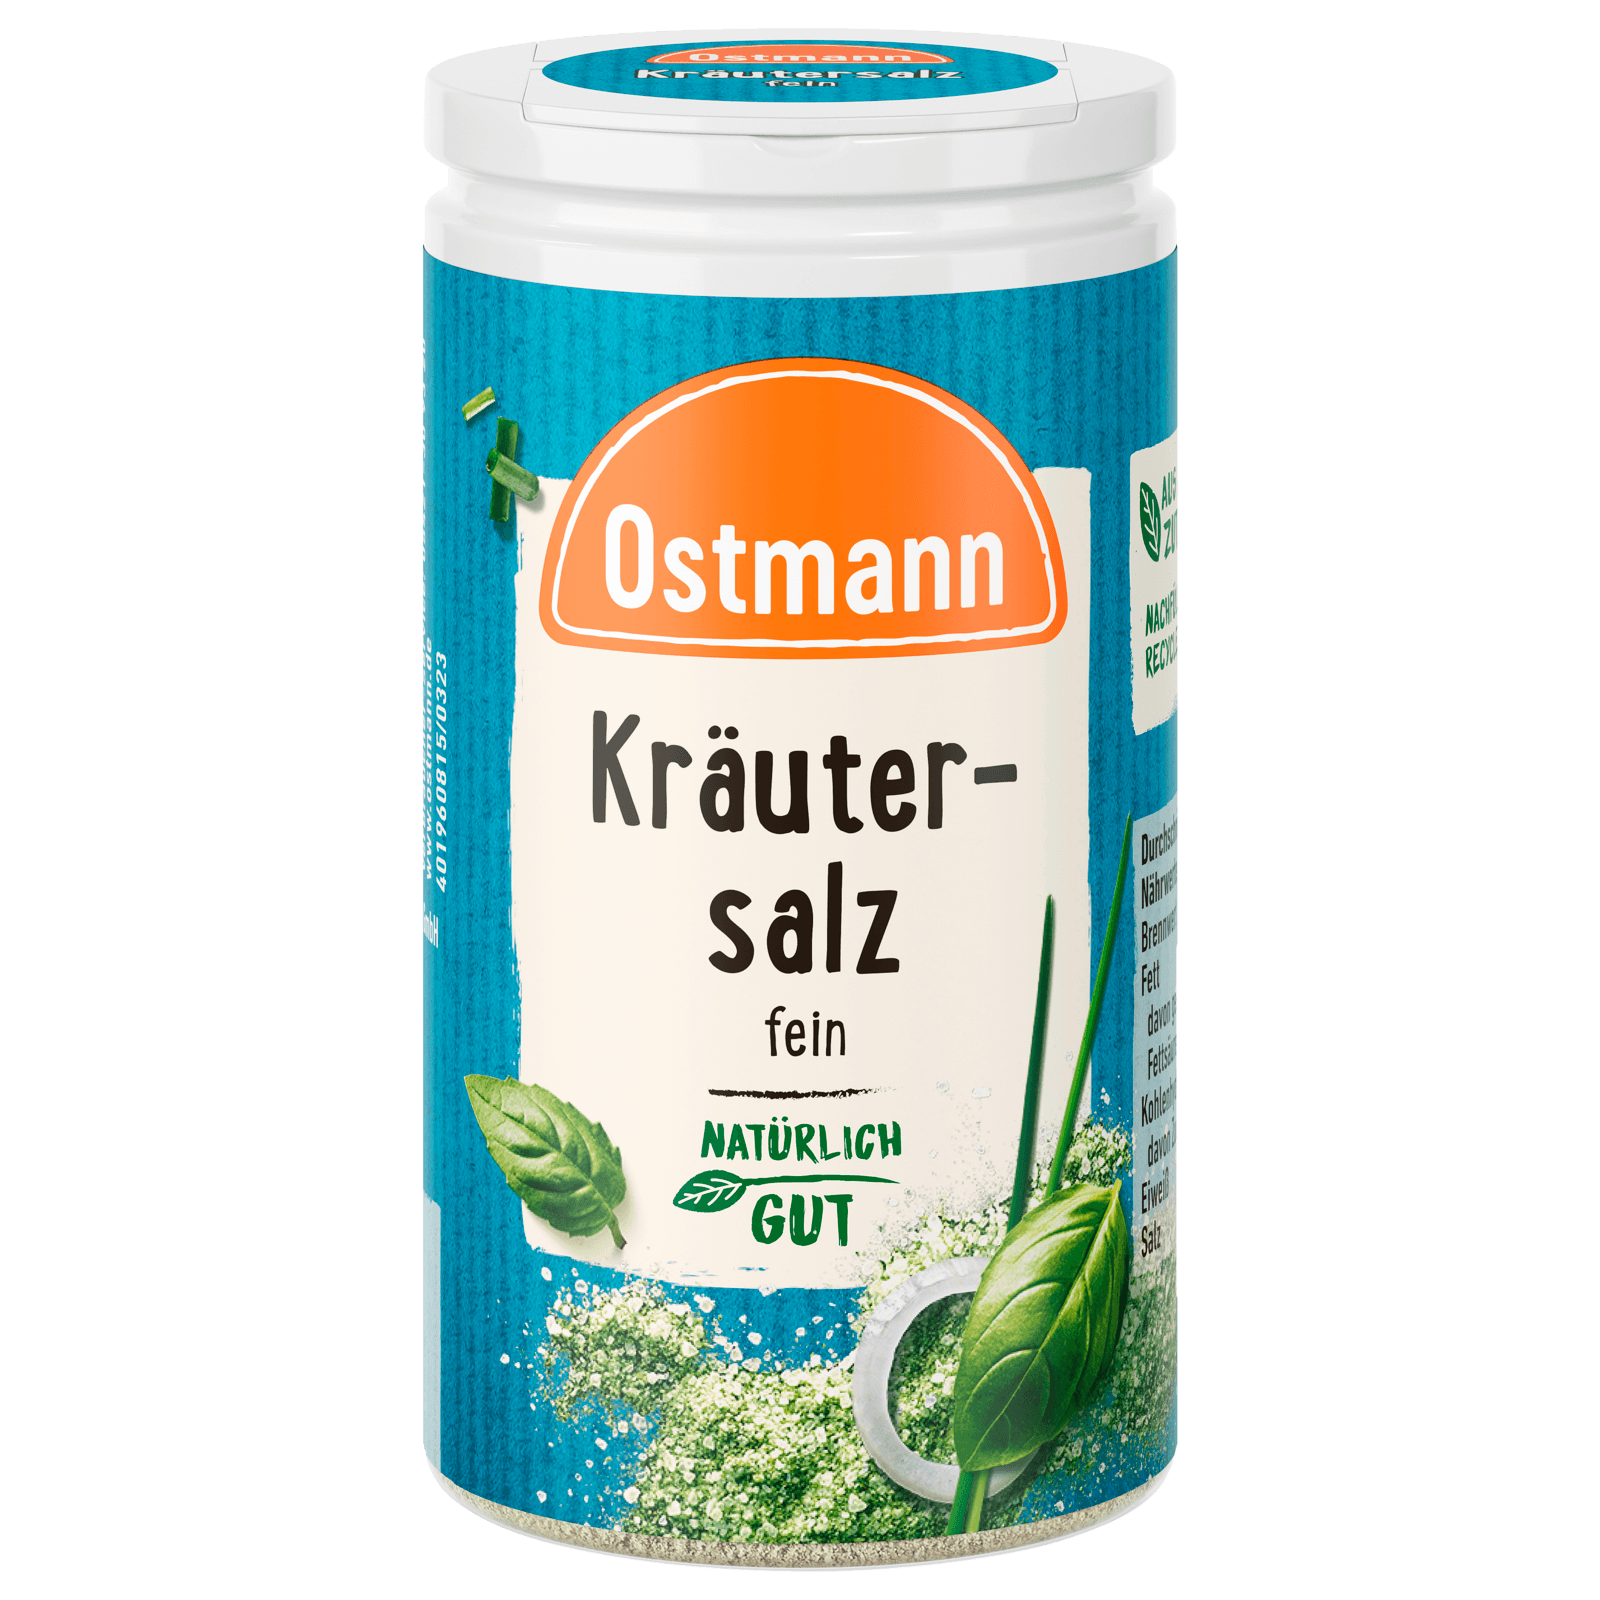 Ostmann Kräuter-Salz 60g bei REWE online bestellen!